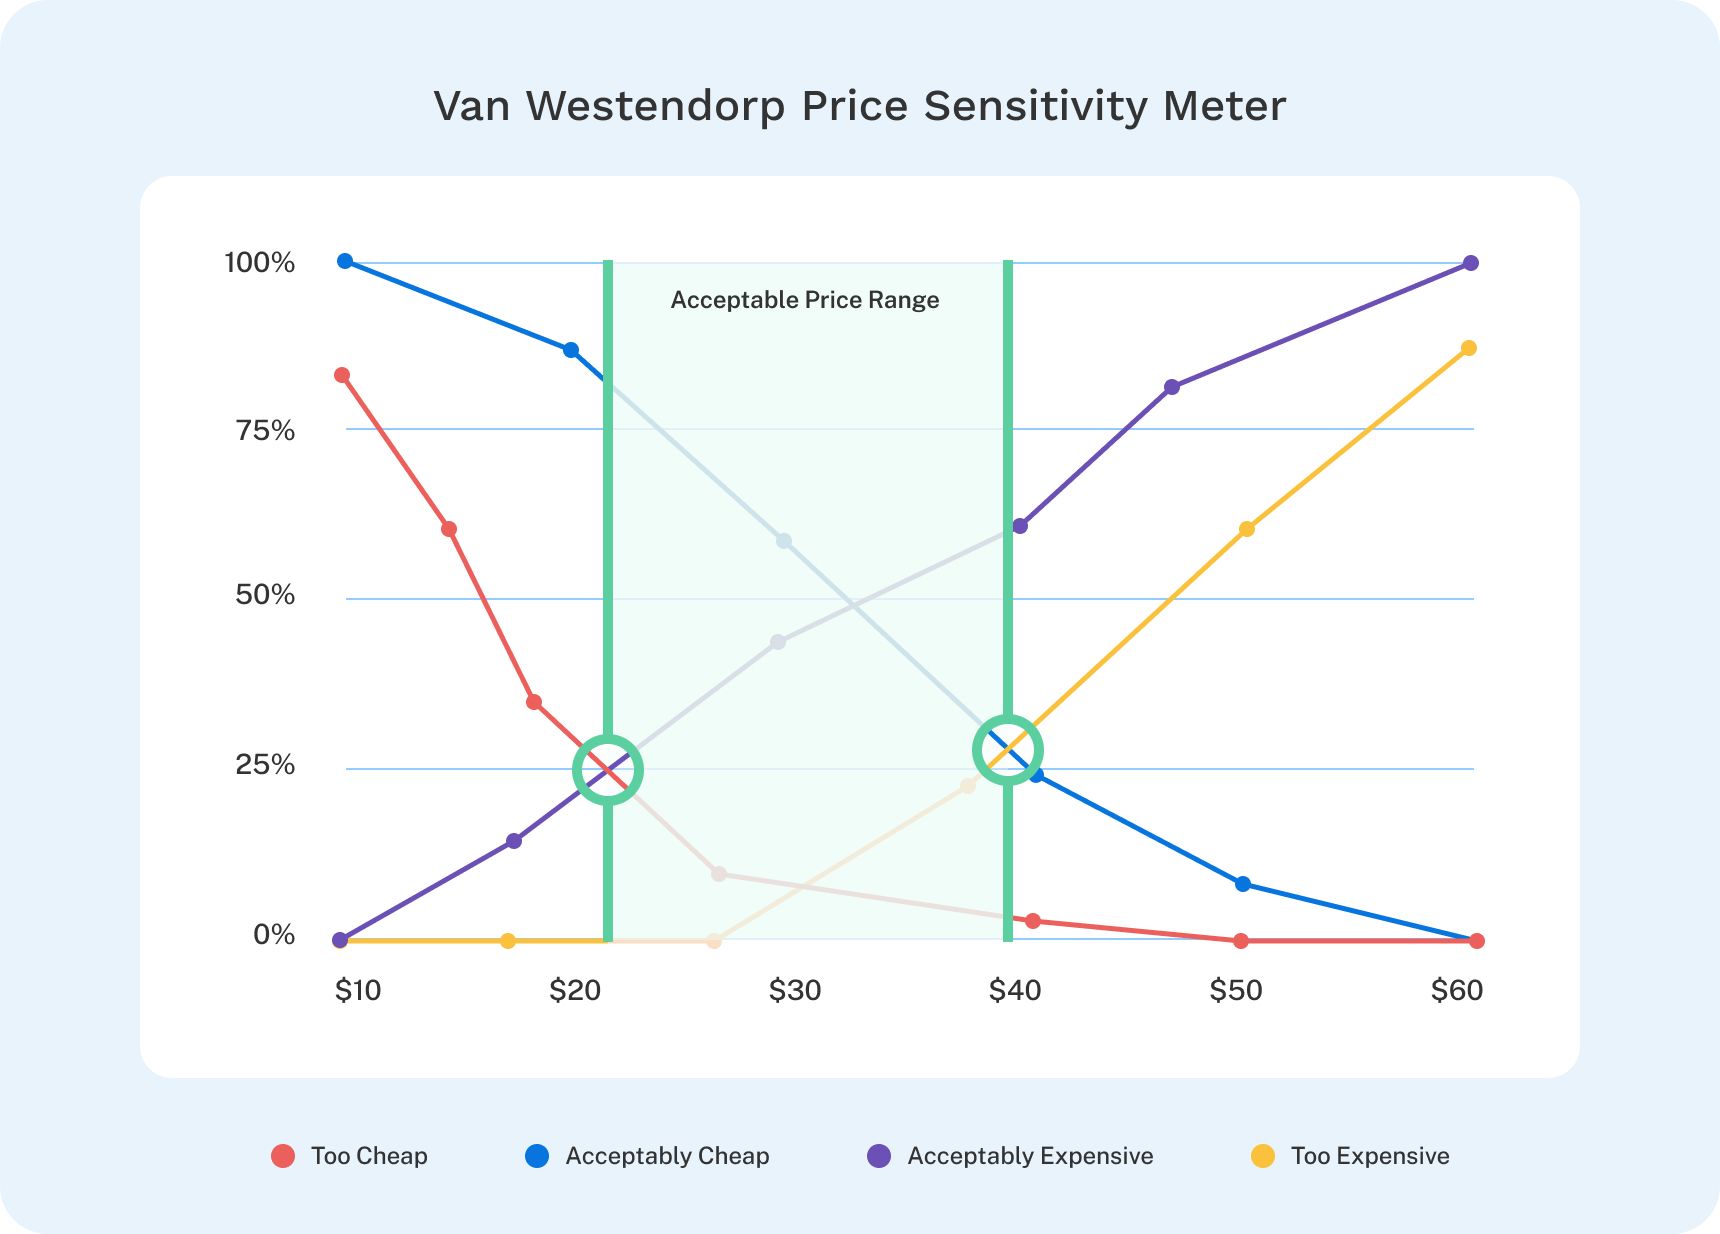 Van Westendorp Pricing Sensitivity Meter chart